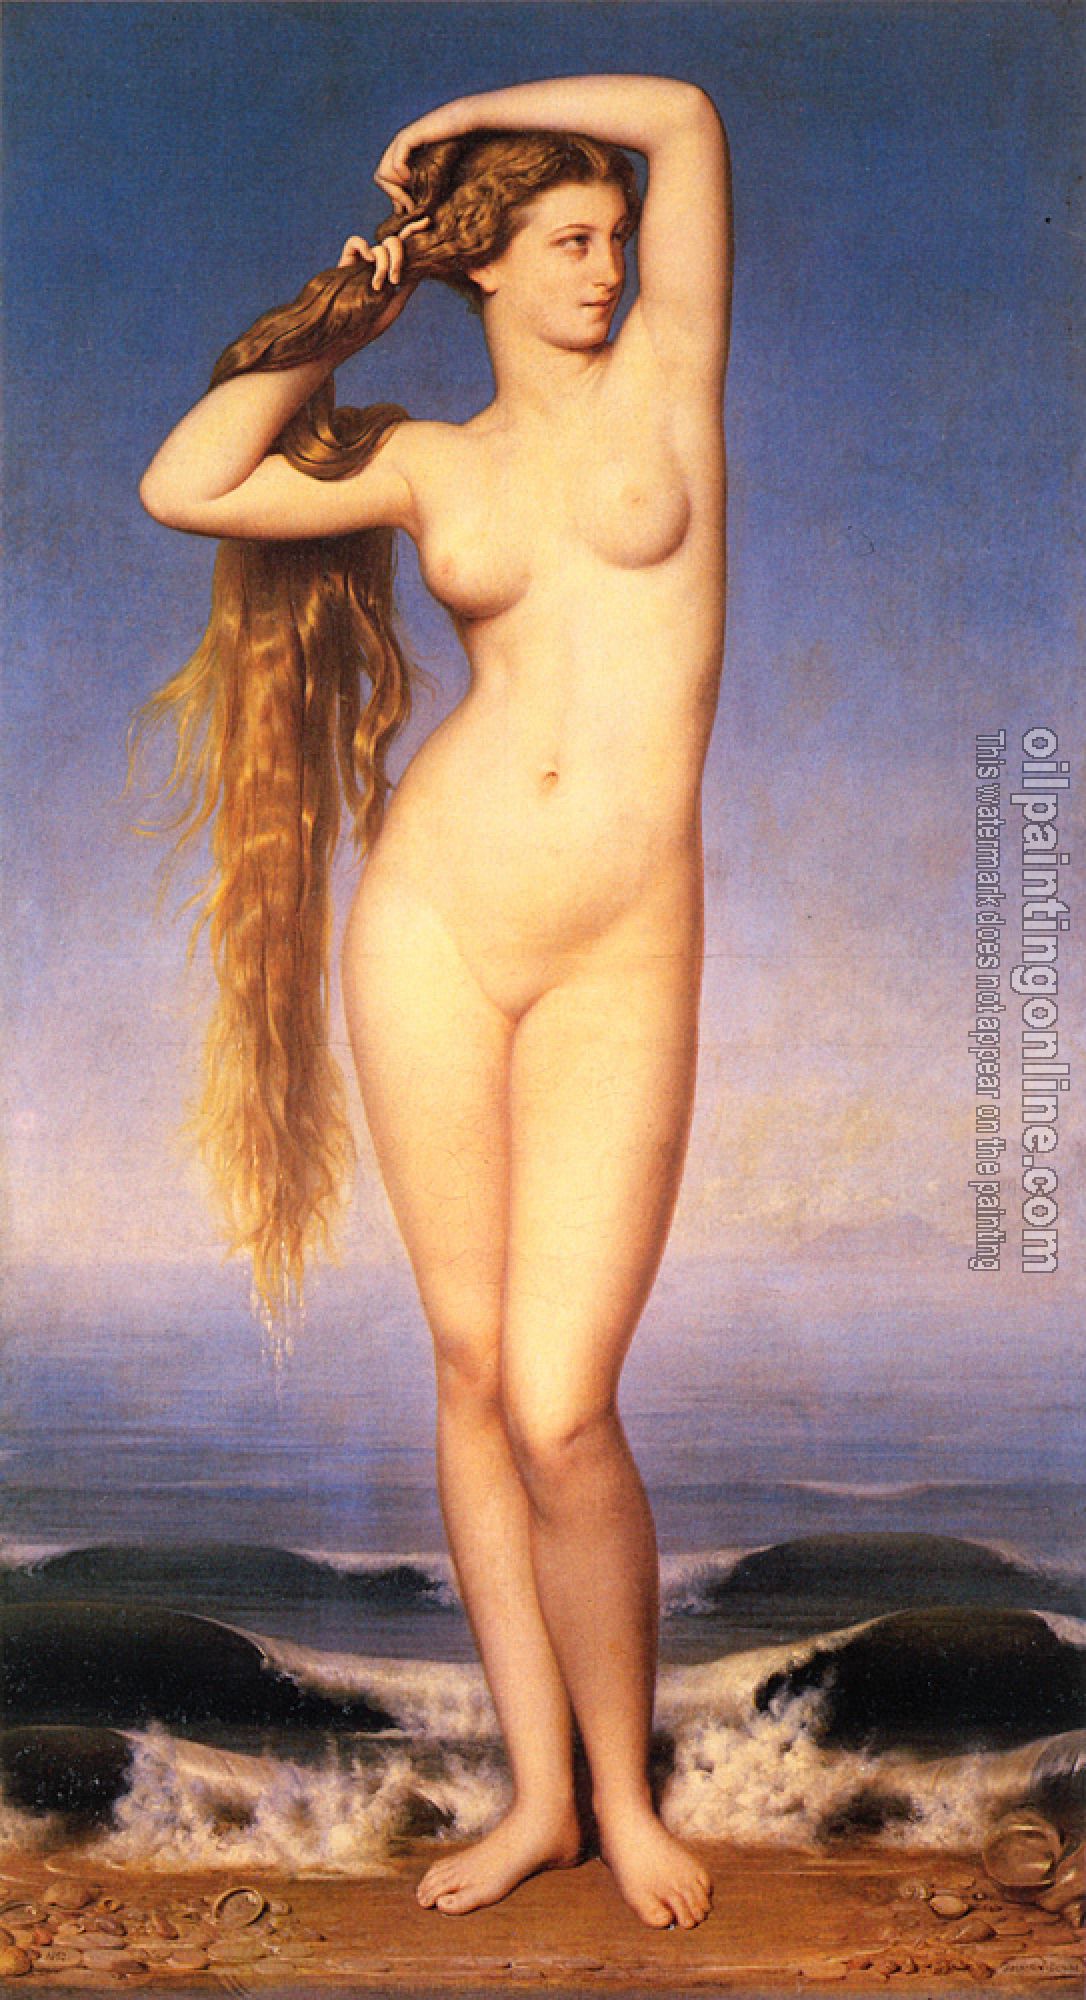 Amaury-Duval, Eugene-Emmanuel - La Naissance de Venus( The Birth of Venus)